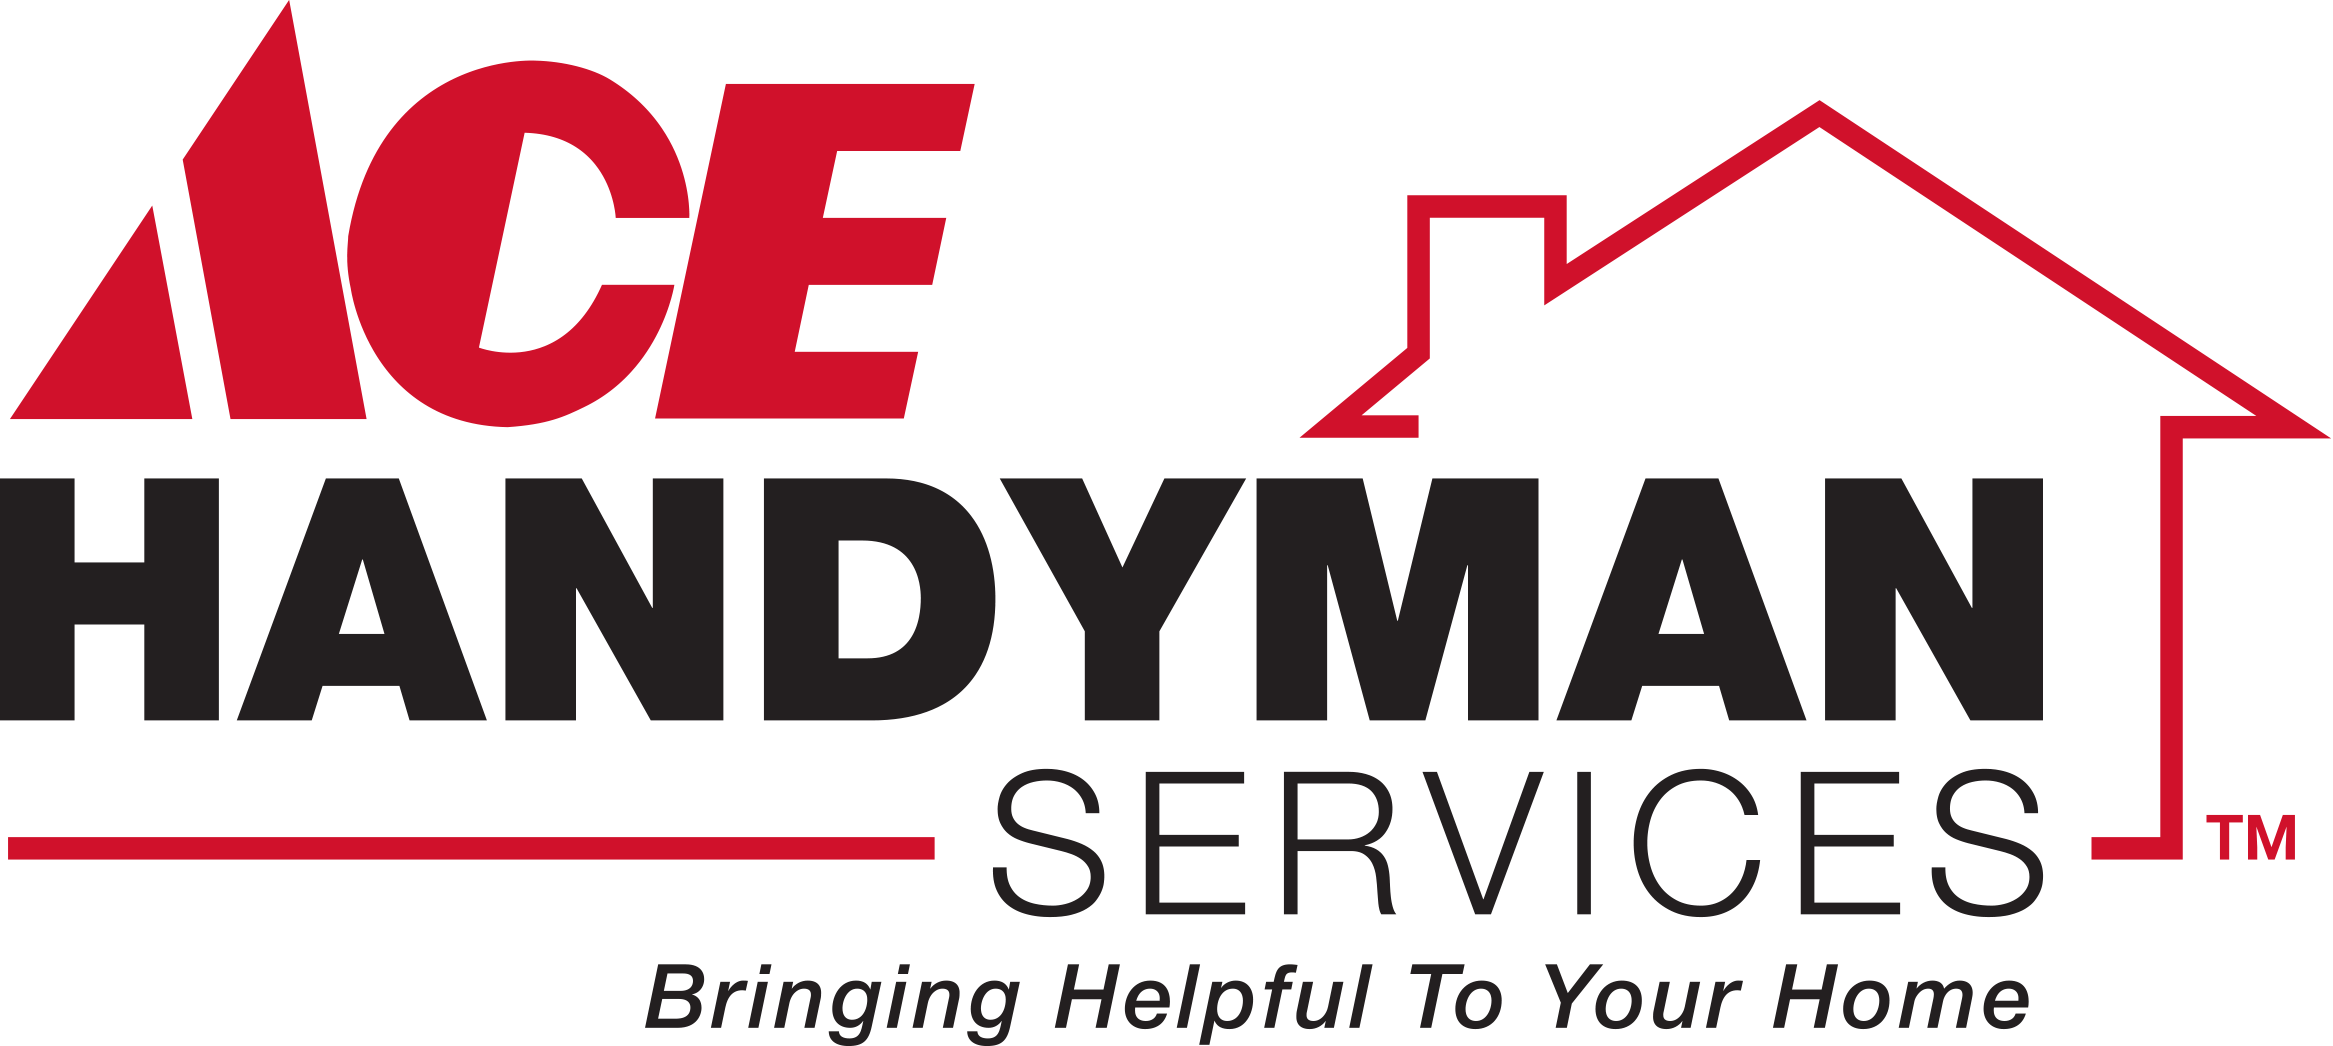 Ace Handyman Services St. George Logo